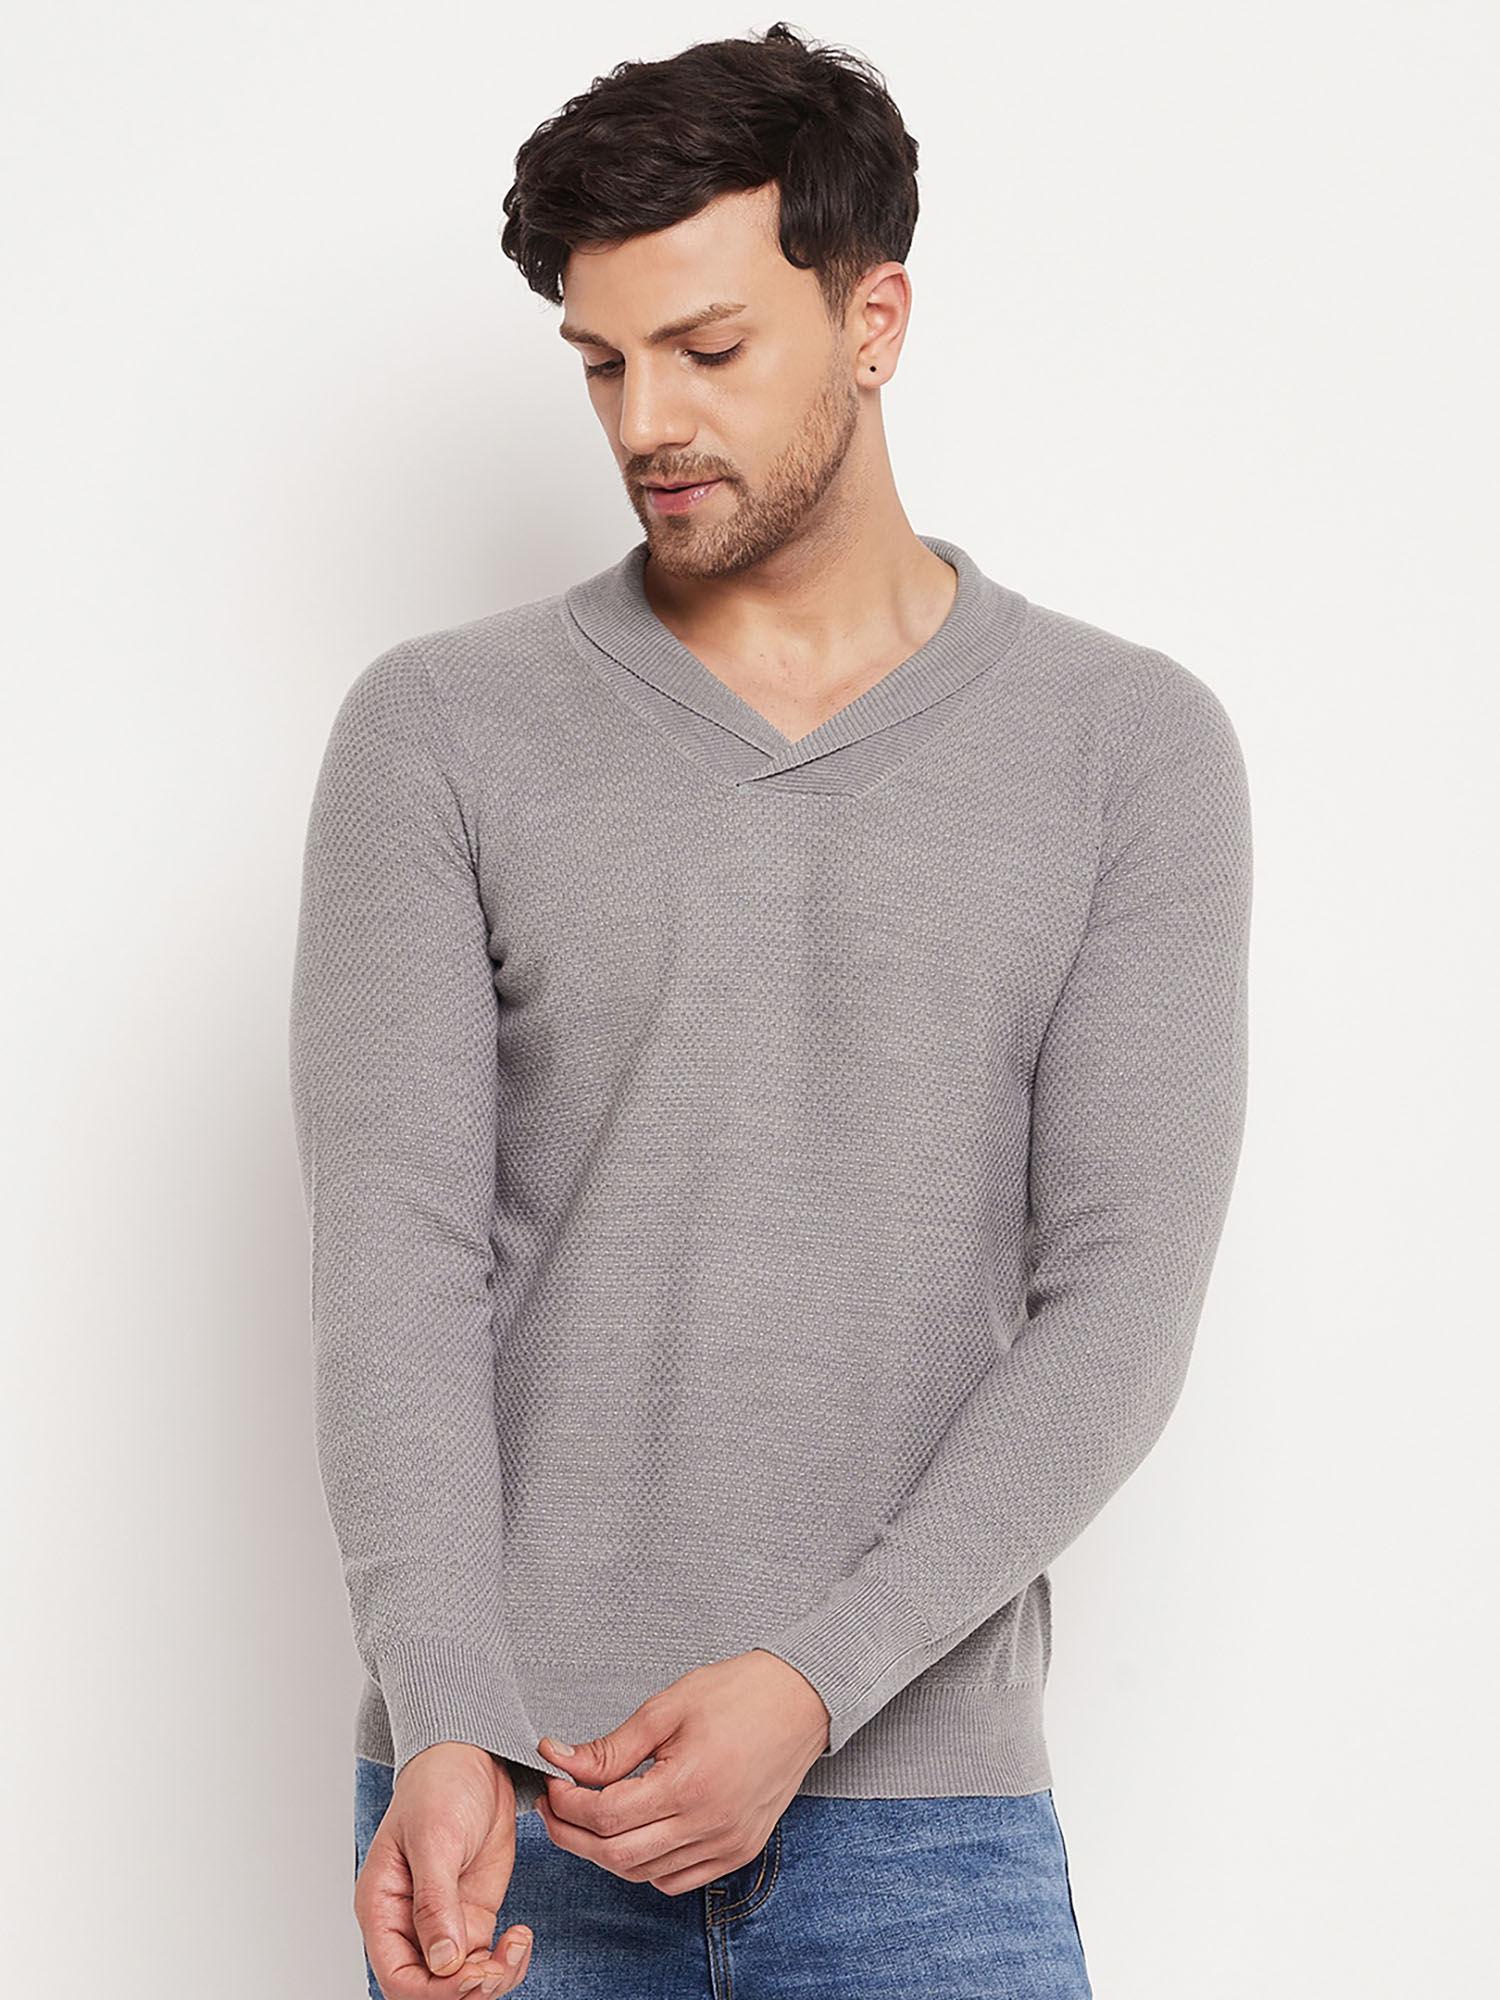 grey-sweater-for-men